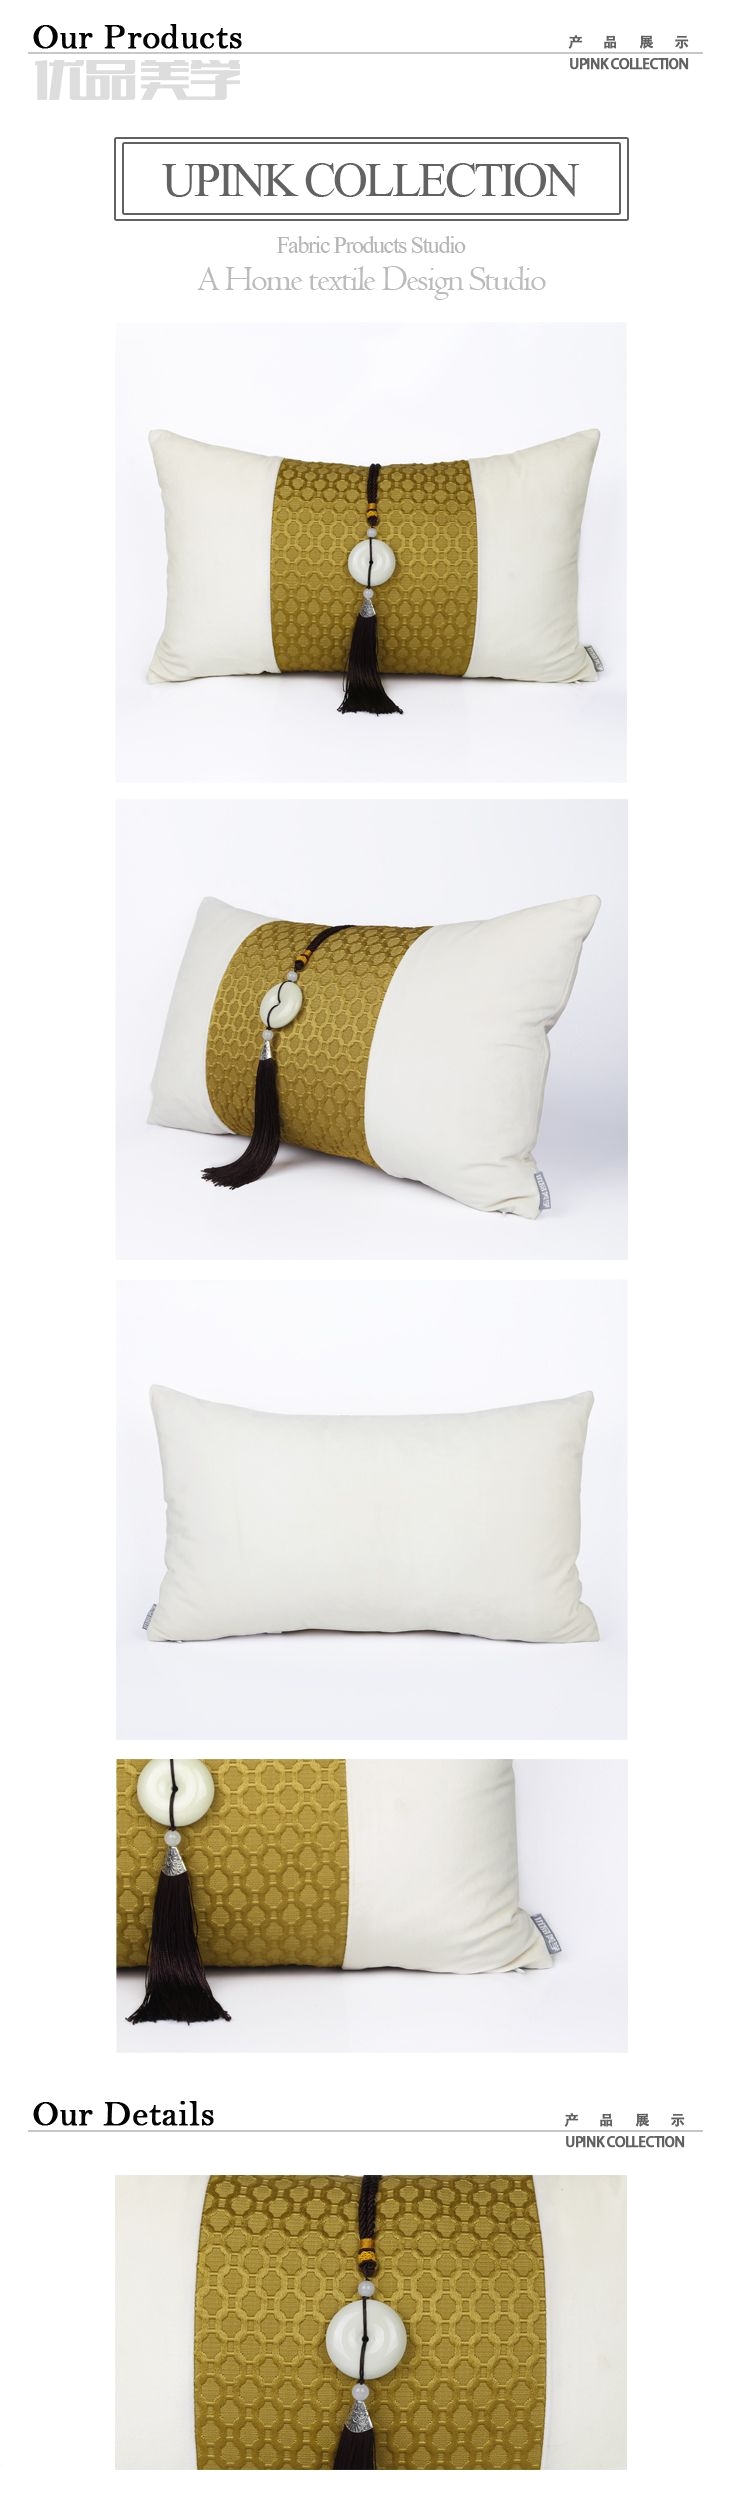 diy pillows sofa cushions accent pillows decorative pillows throw pillows cushion pillow cushion covers pillow covers cushion ideas